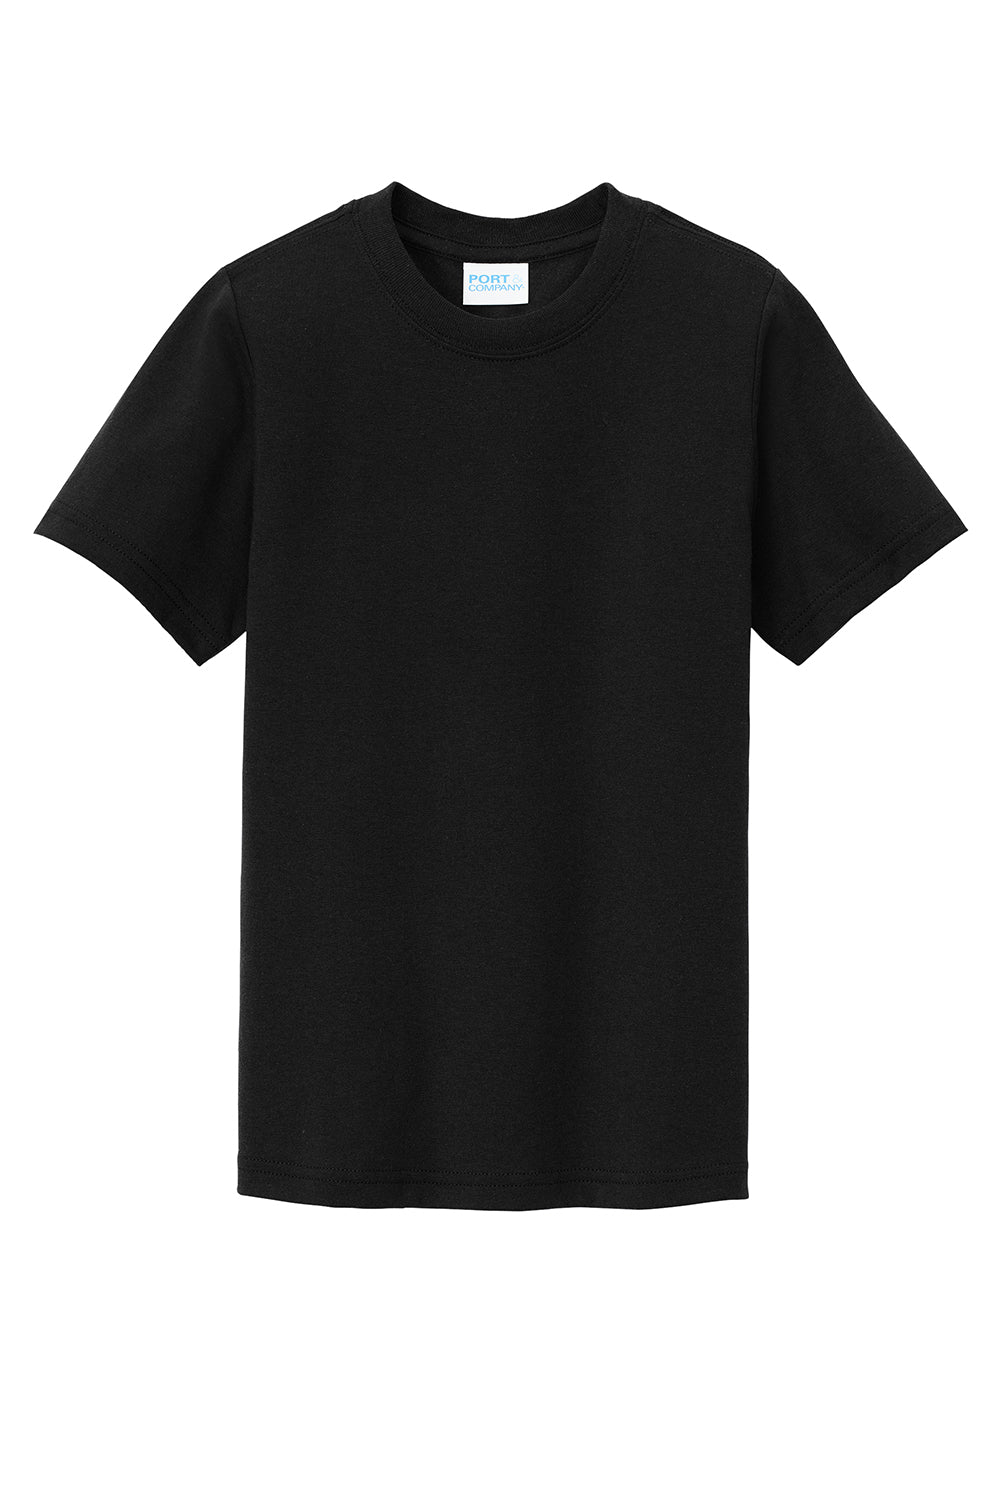 Port & Company PC330Y Youth Short Sleeve Crewneck T-Shirt Black Flat Front